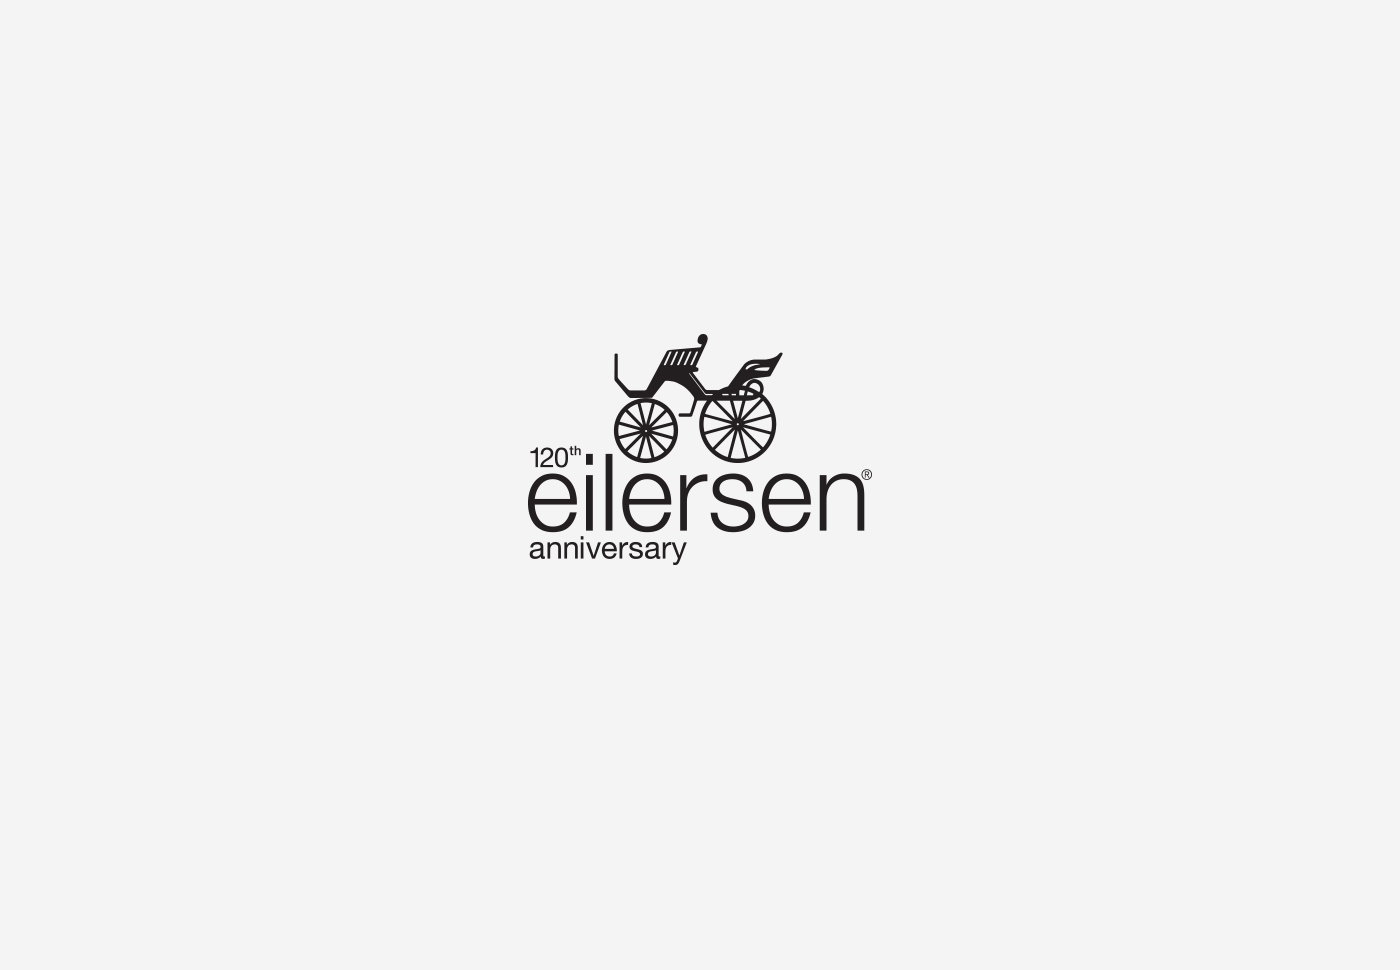 Eilersen – Anniversary logo 120 years